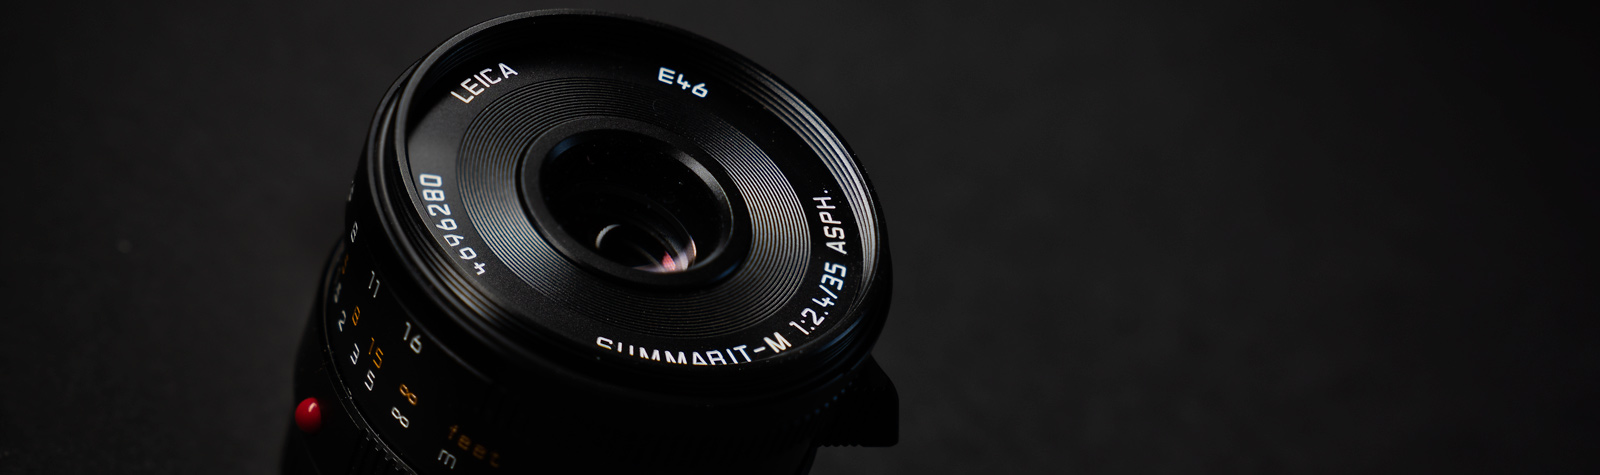 Leica Summarit 35mm f/2.4 ASPH review